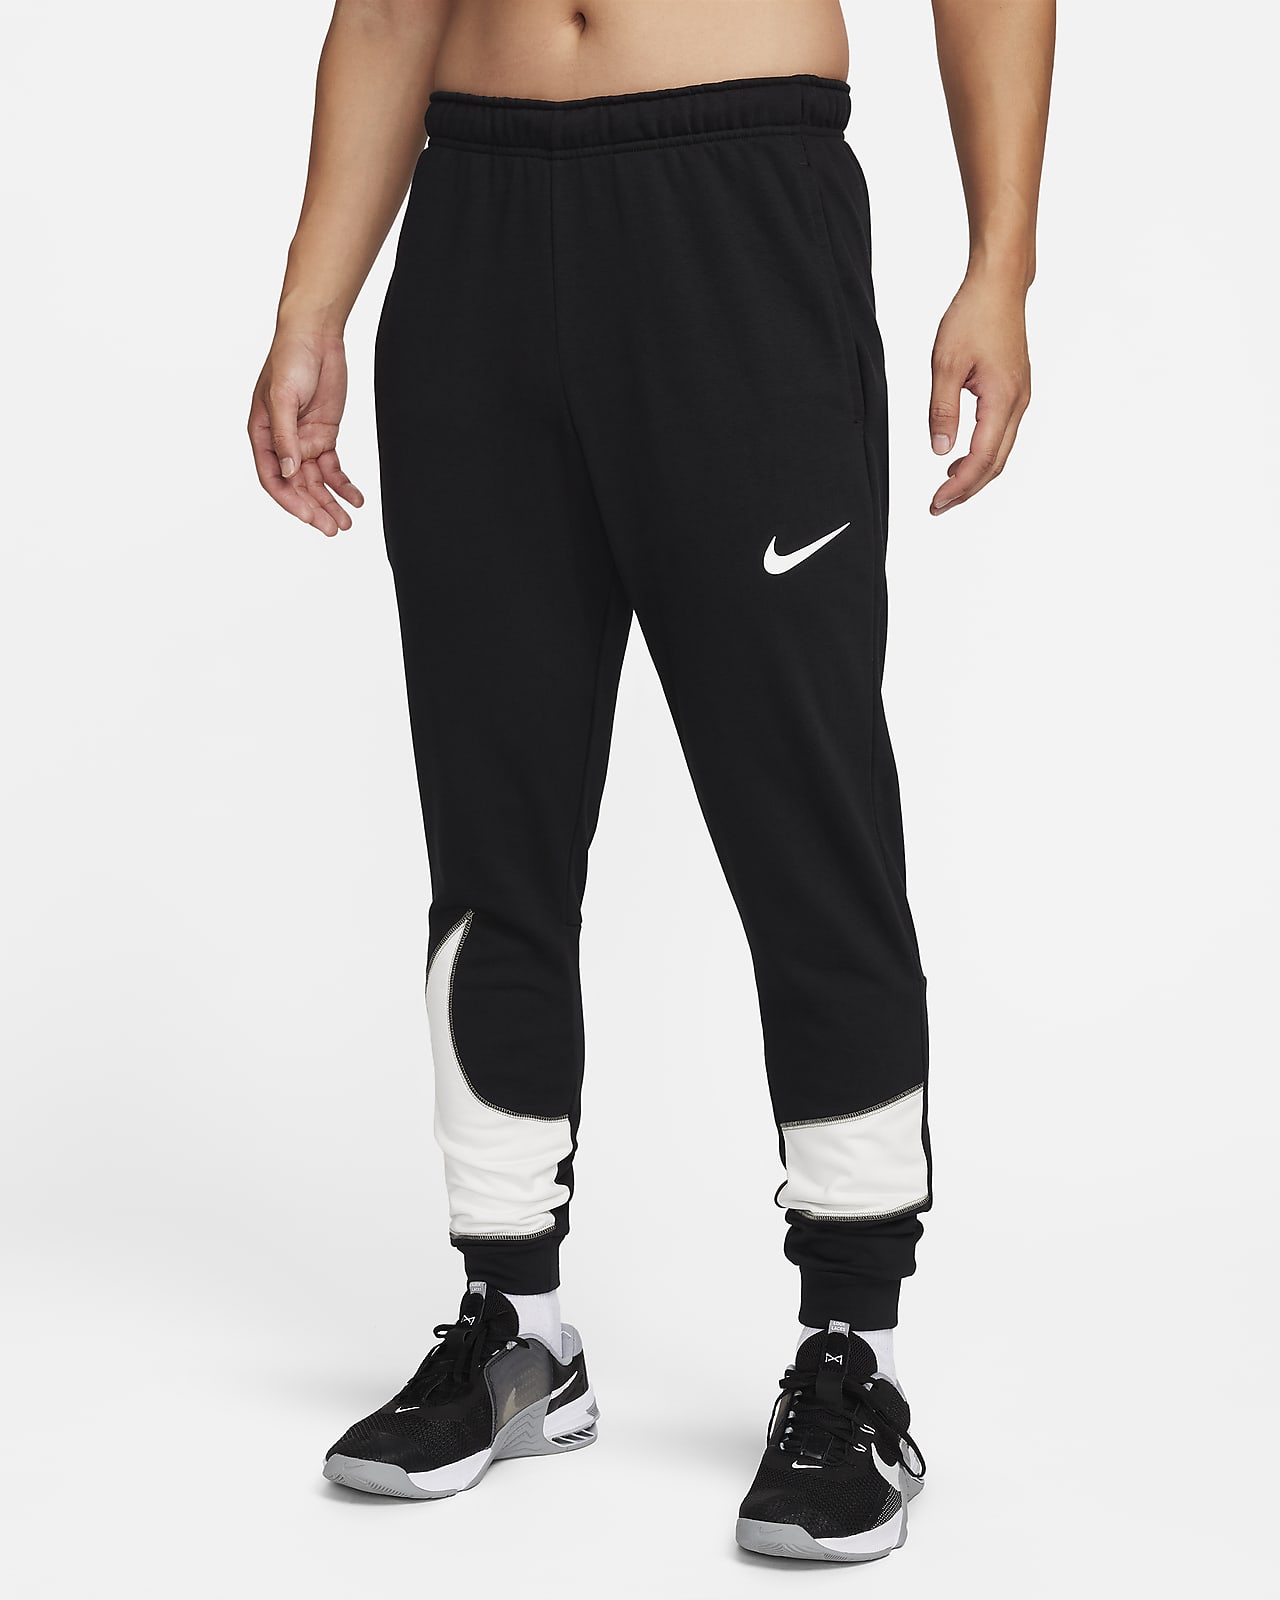 Pants de fitness entallados para hombre Nike Dri-FIT. Nike MX